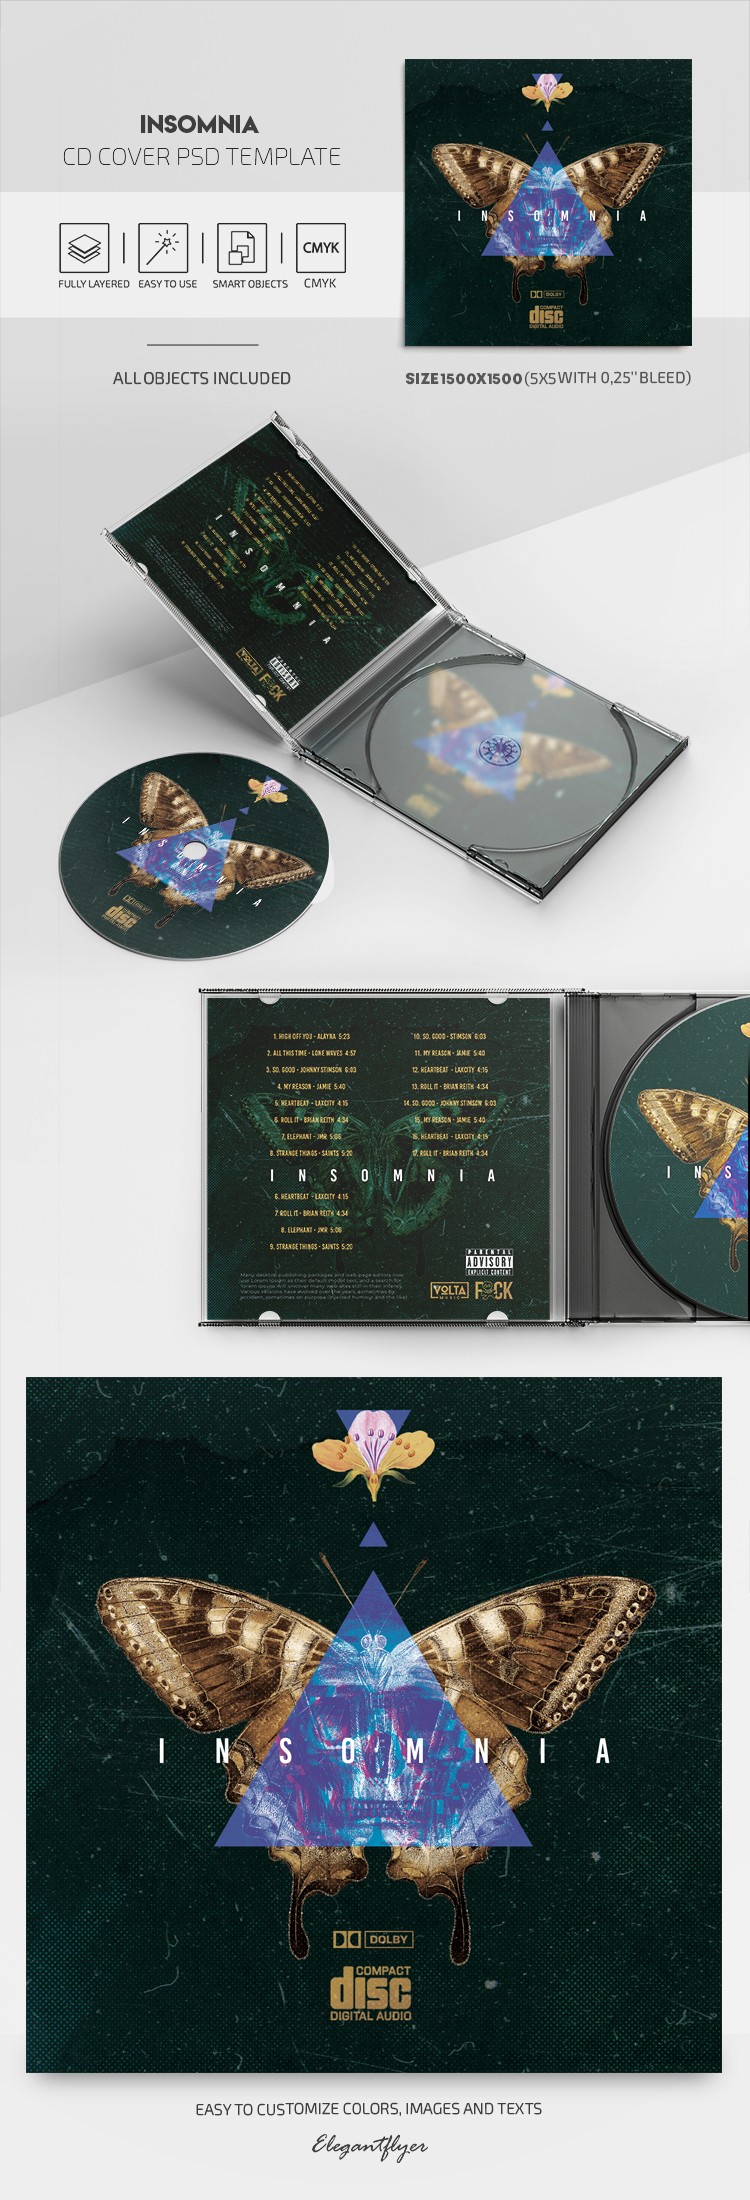 Capa do CD Insomnia by ElegantFlyer